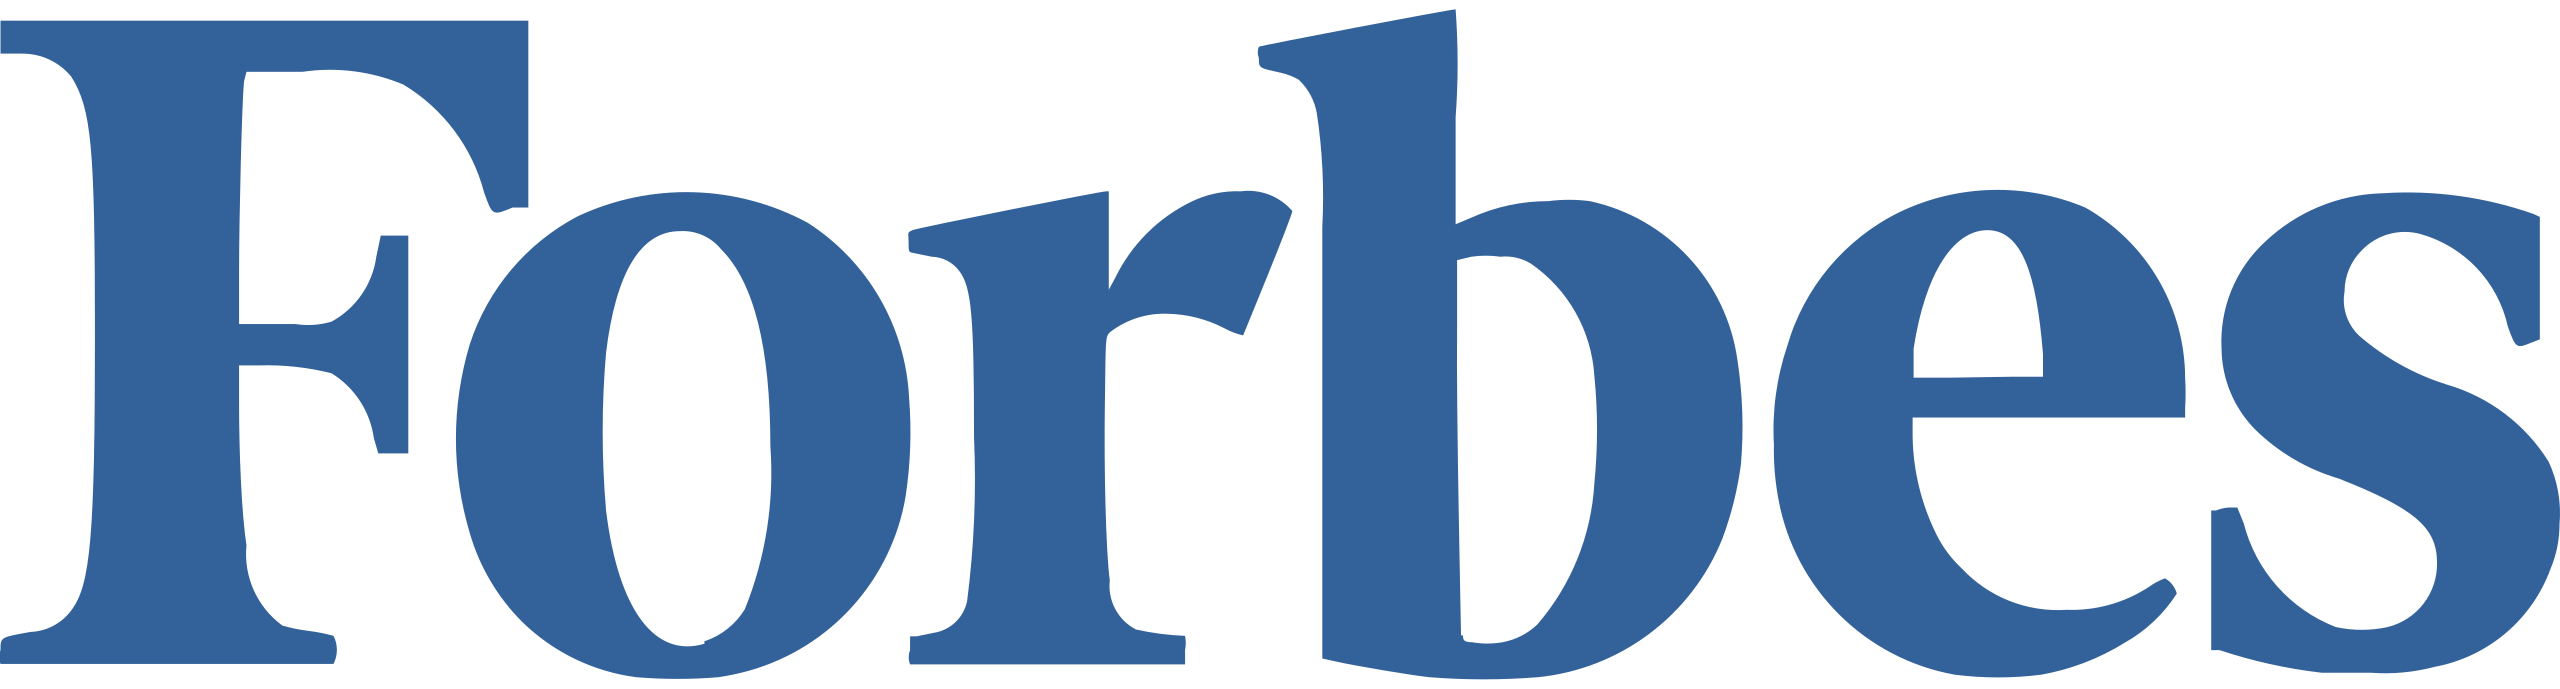 Logo Forbes
